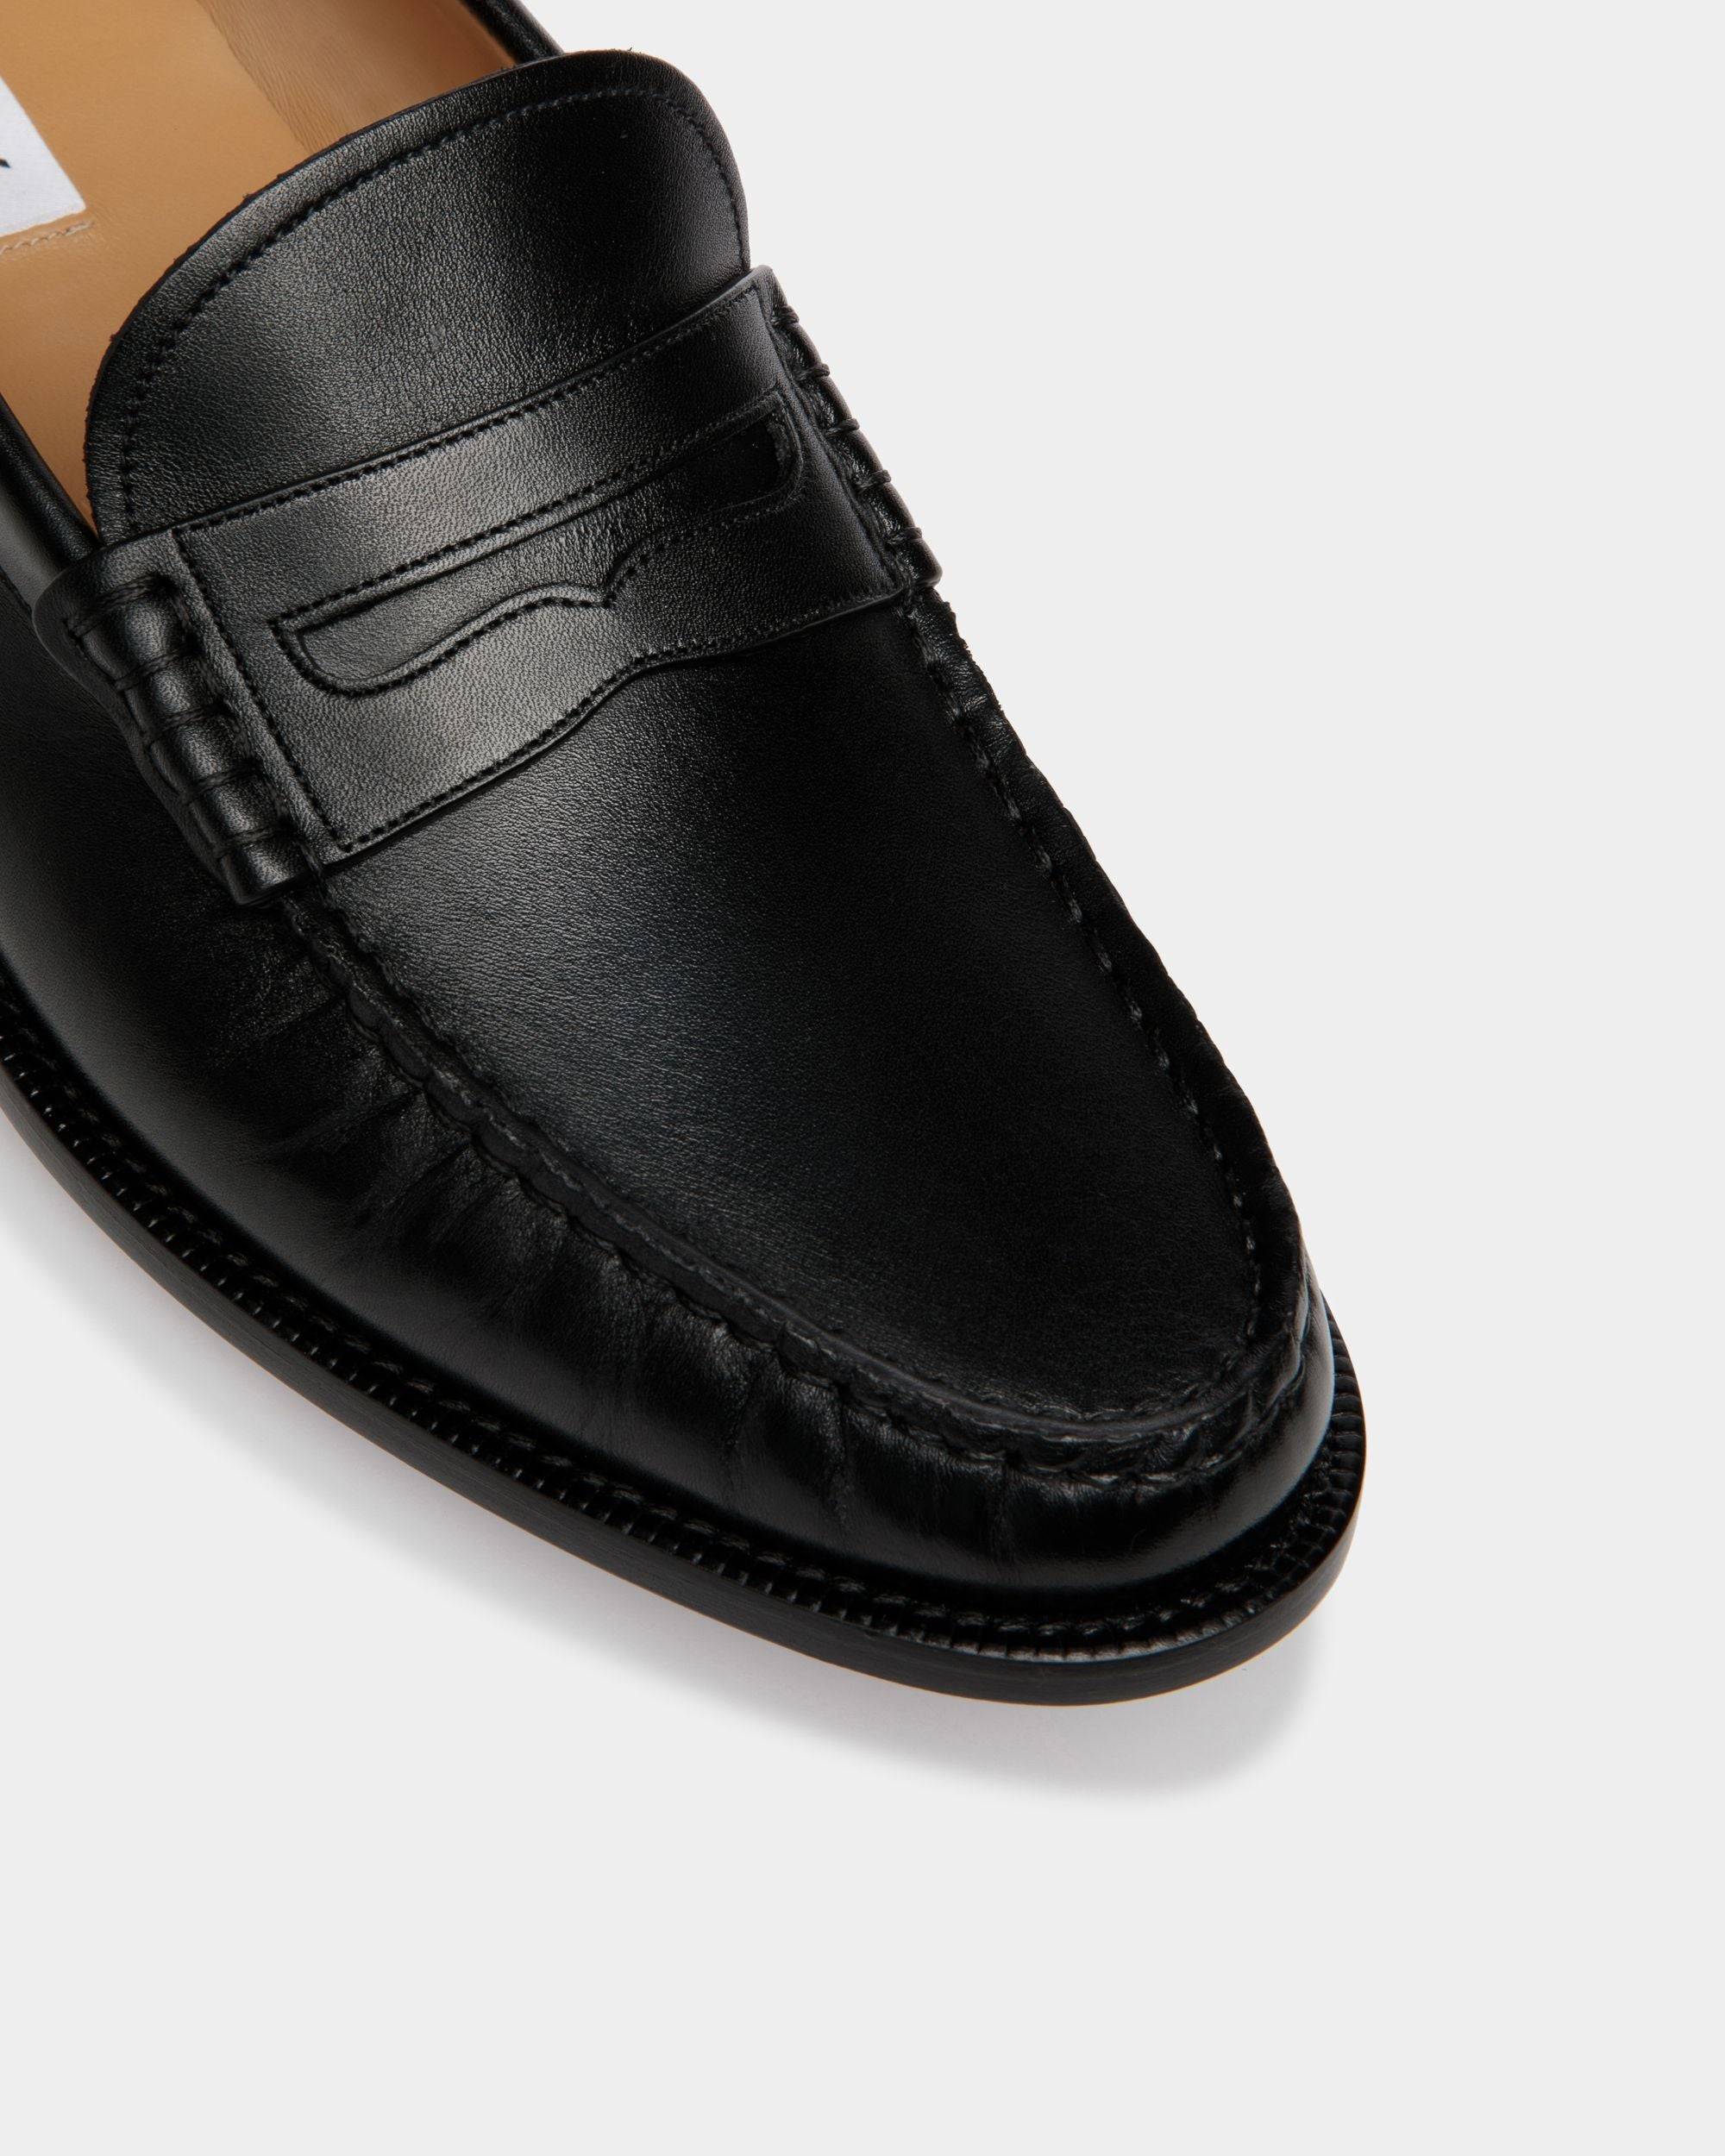 Oregon | Herren-Loafer aus schwarzem Leder | Bally | Still Life Detail